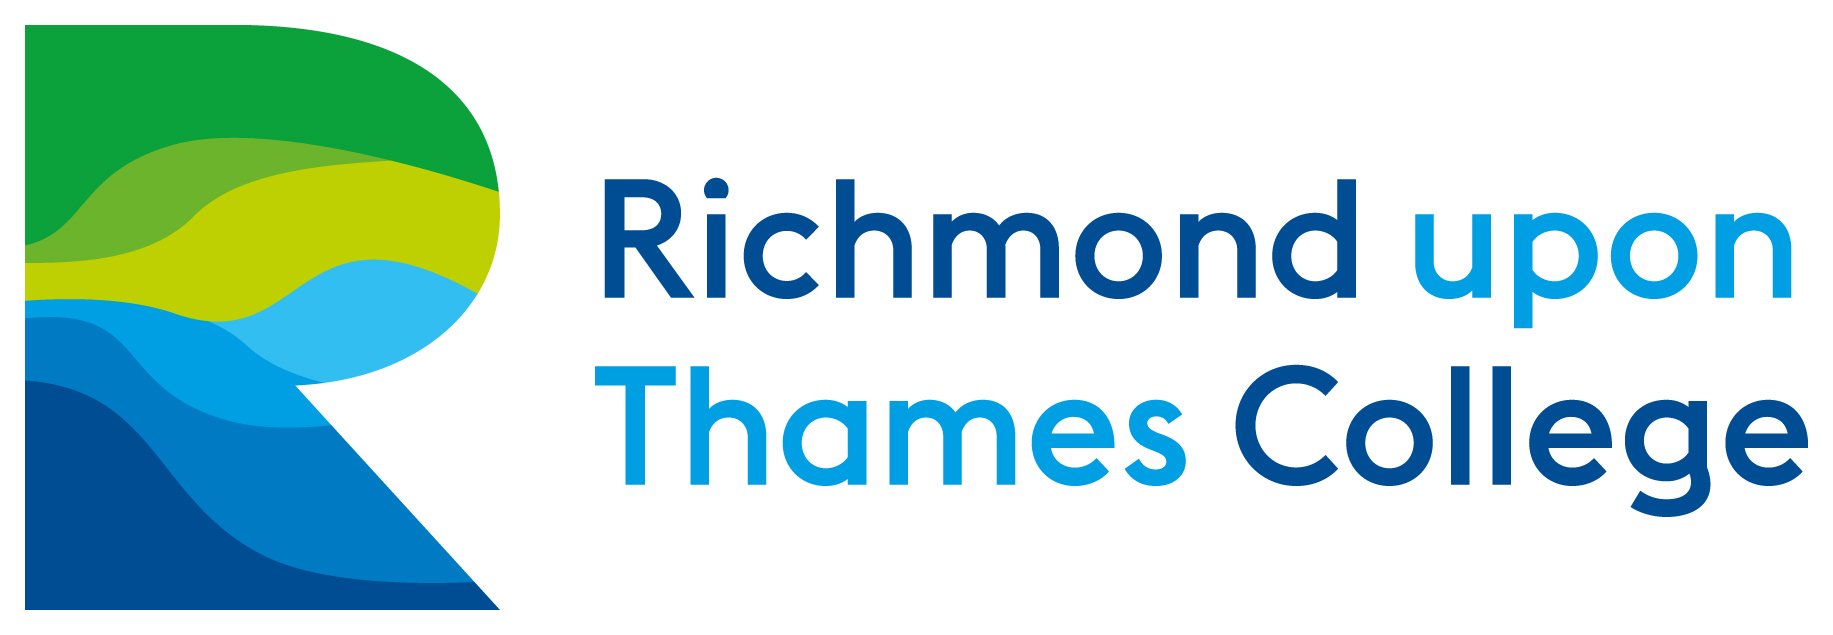 Richmond-upon-thames-college-logo-rgb